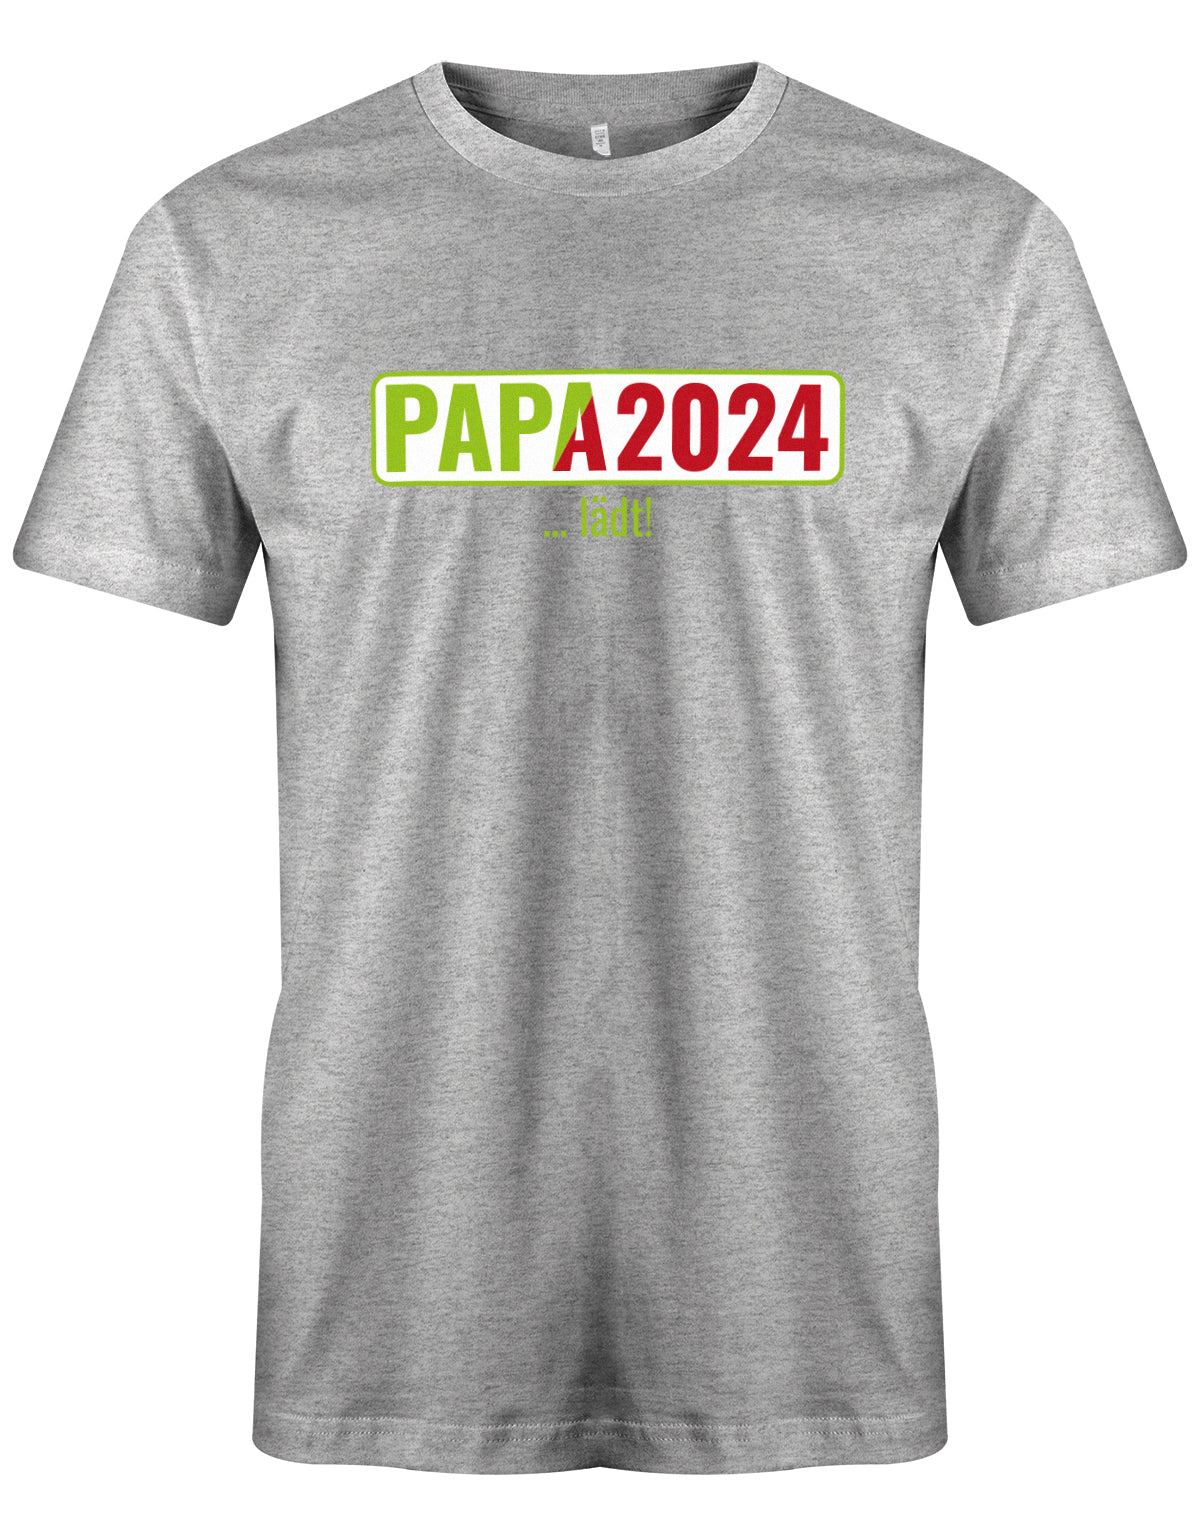 Papa 2024 lädt - loading - Werdender Papa Shirt Herren Grau